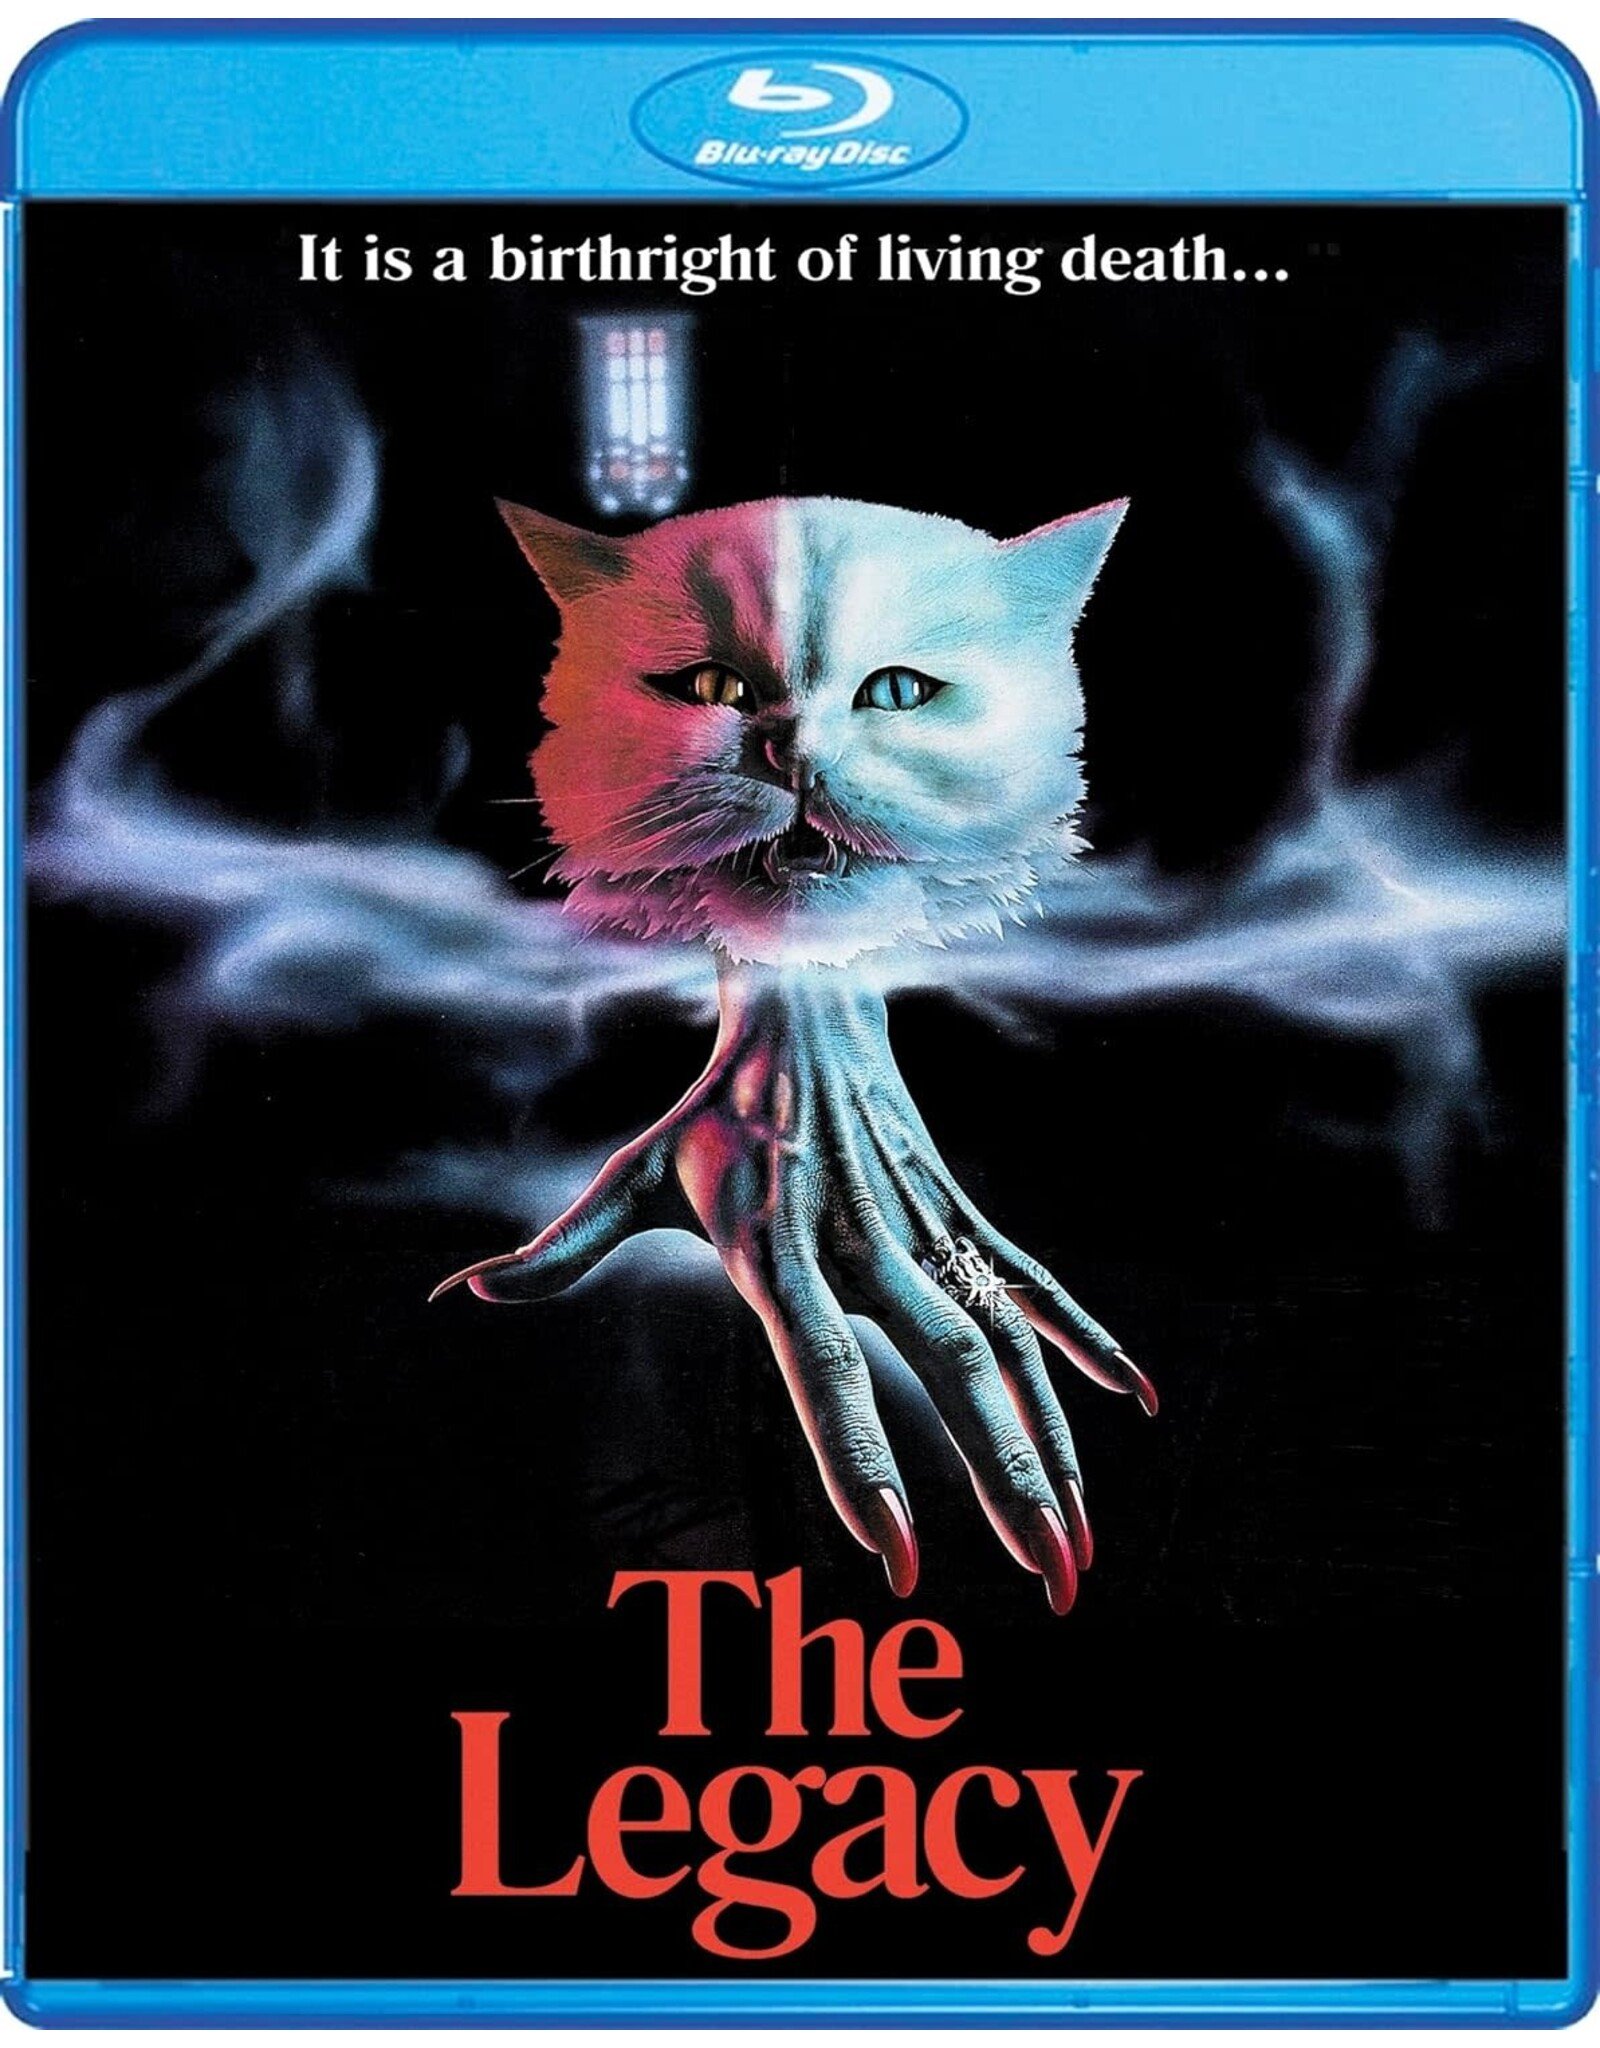 Horror Legacy, The - Scream Factory (Brand New)